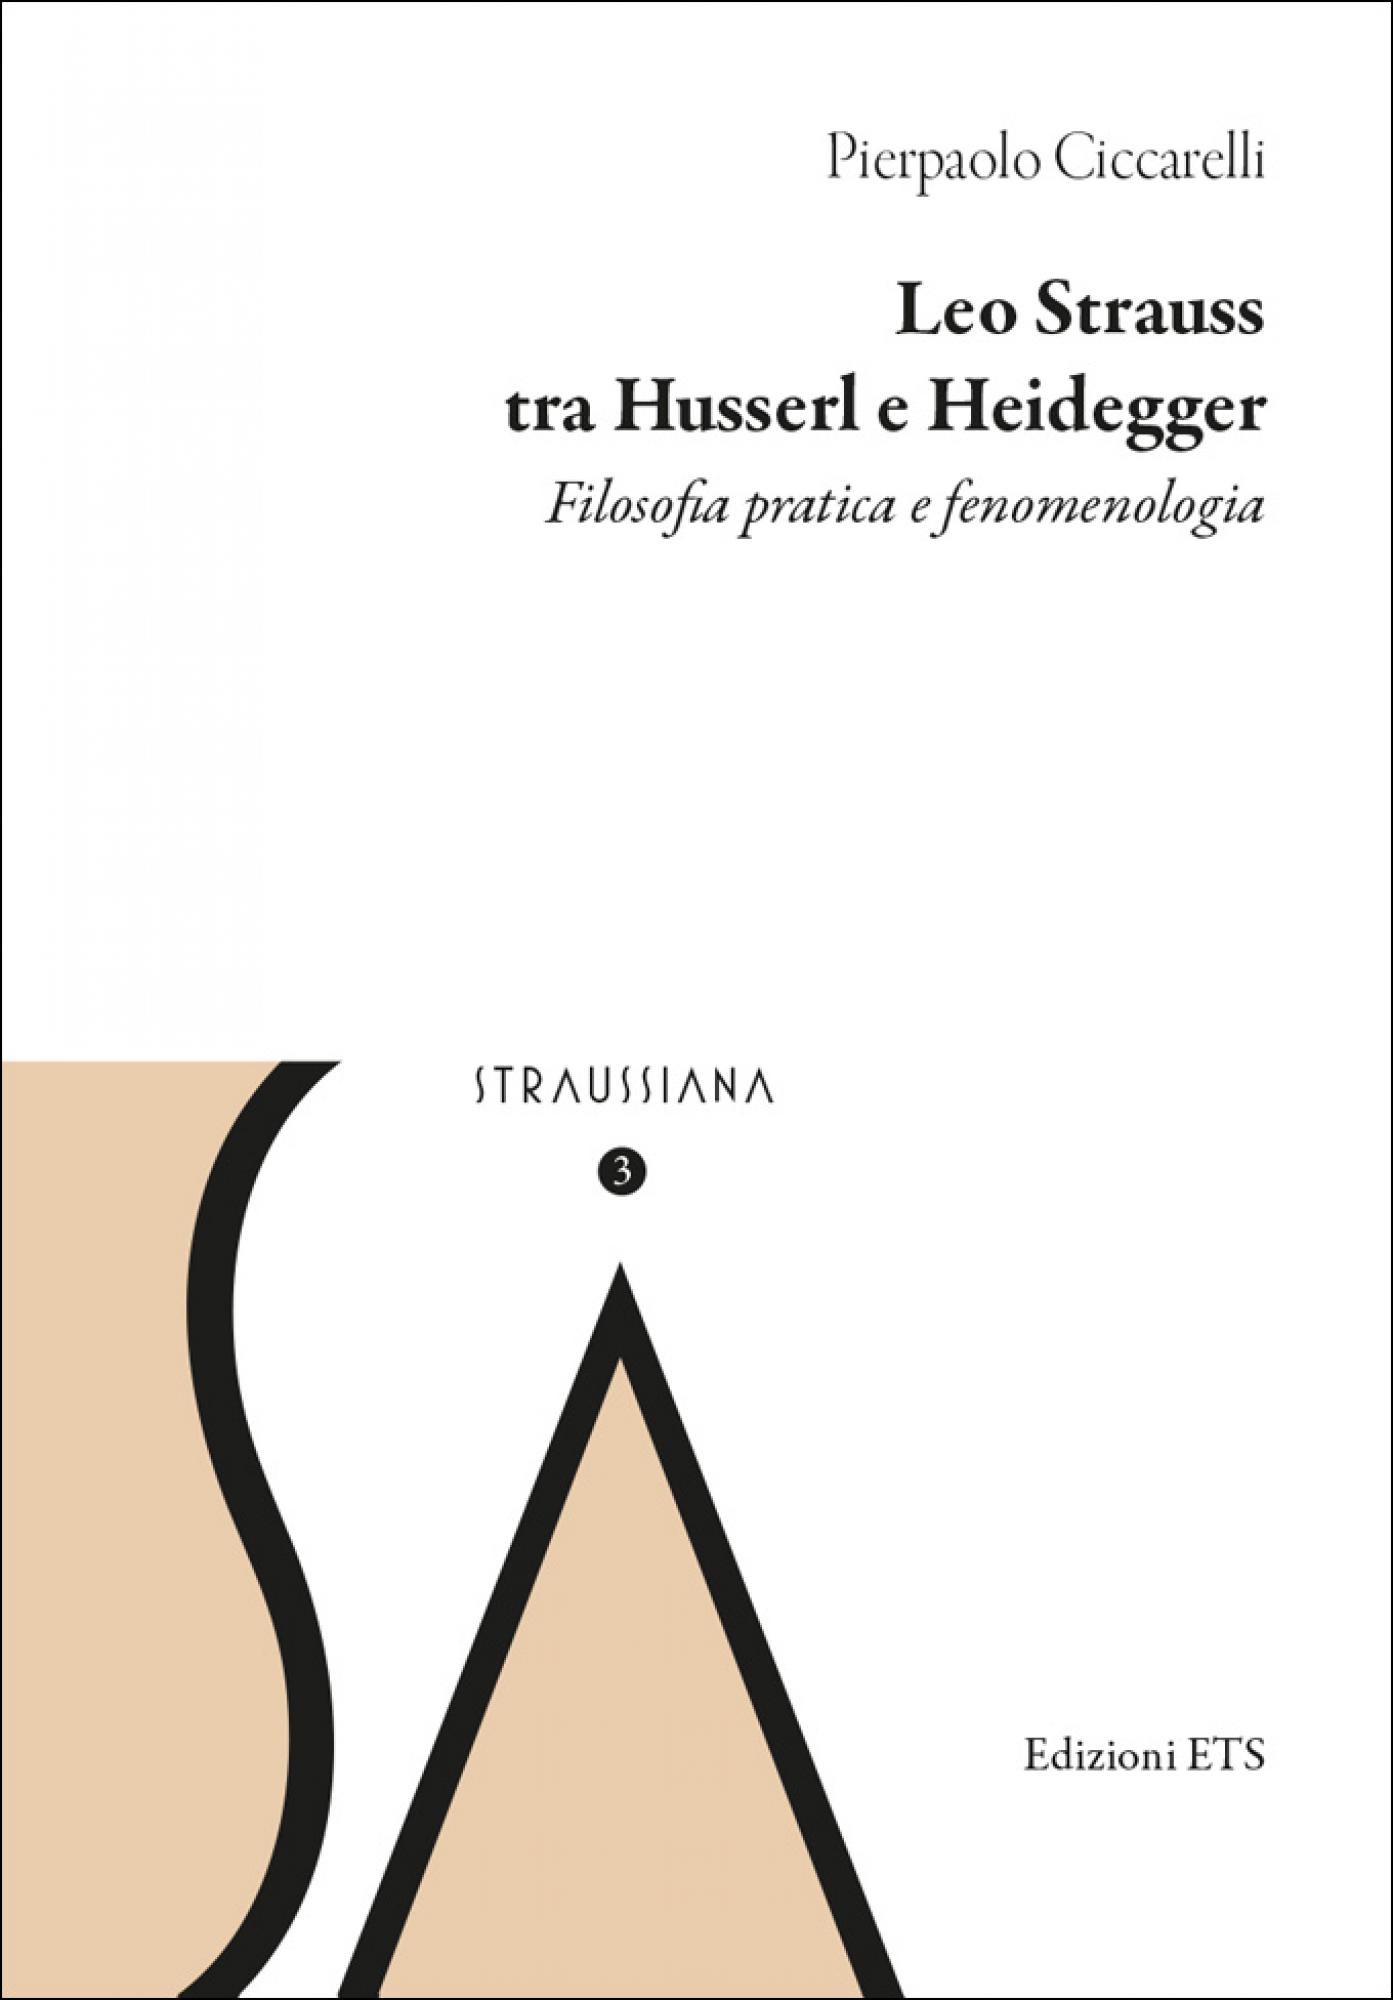 Leo Strauss tra Husserl e Heidegger.Filosofia pratica e fenomenologia